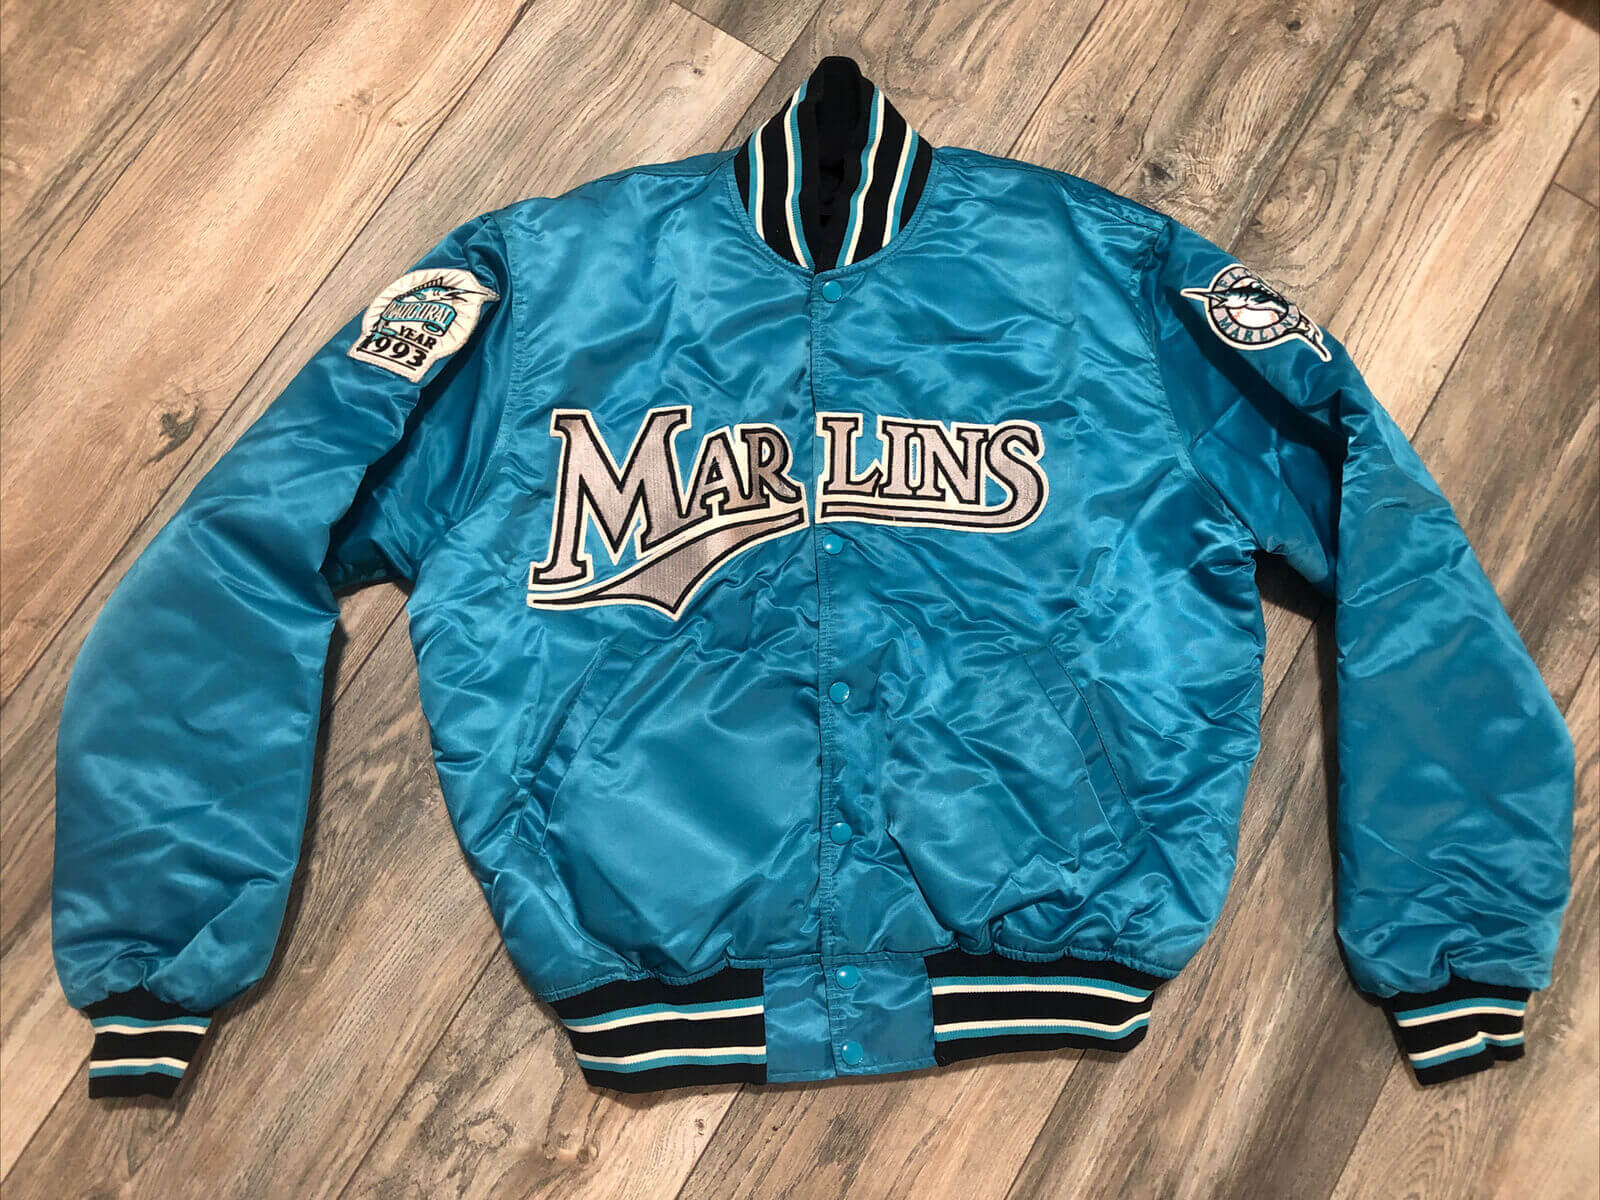 Maker of Jacket MLB Miami Marlins Vintage Blue Satin